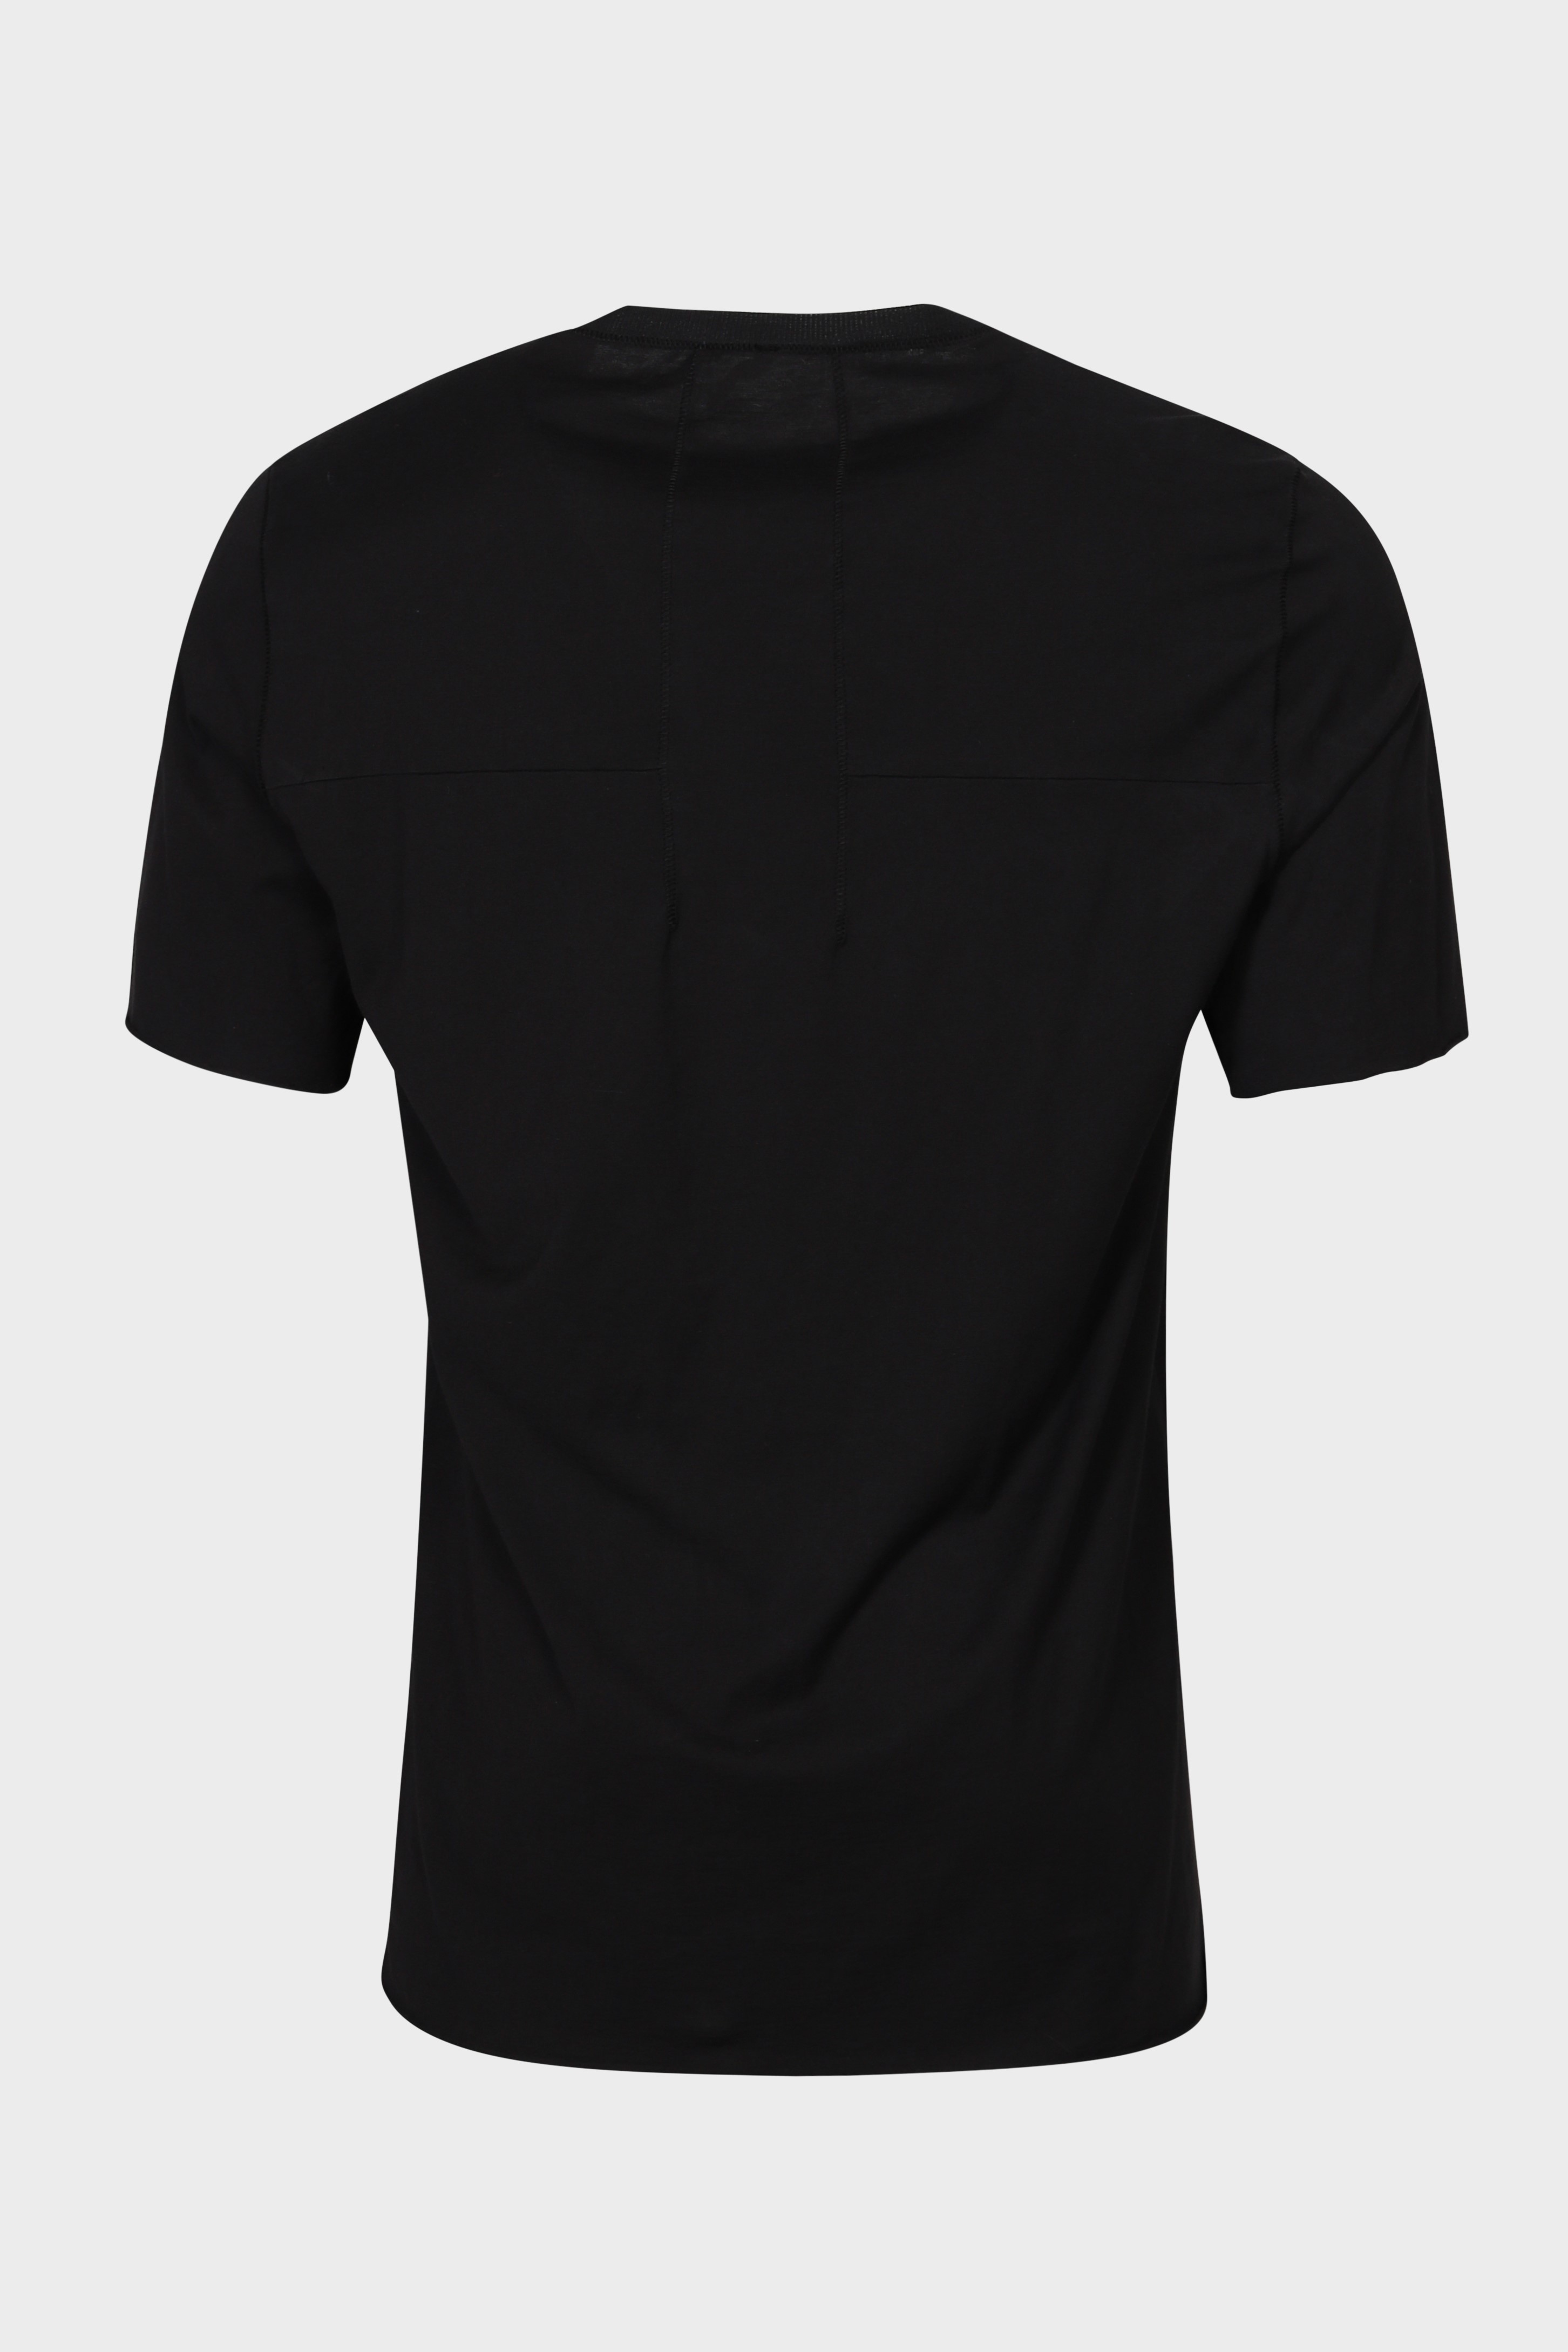 TRANSIT UOMO Cotton Stretch T-Shirt in Black S